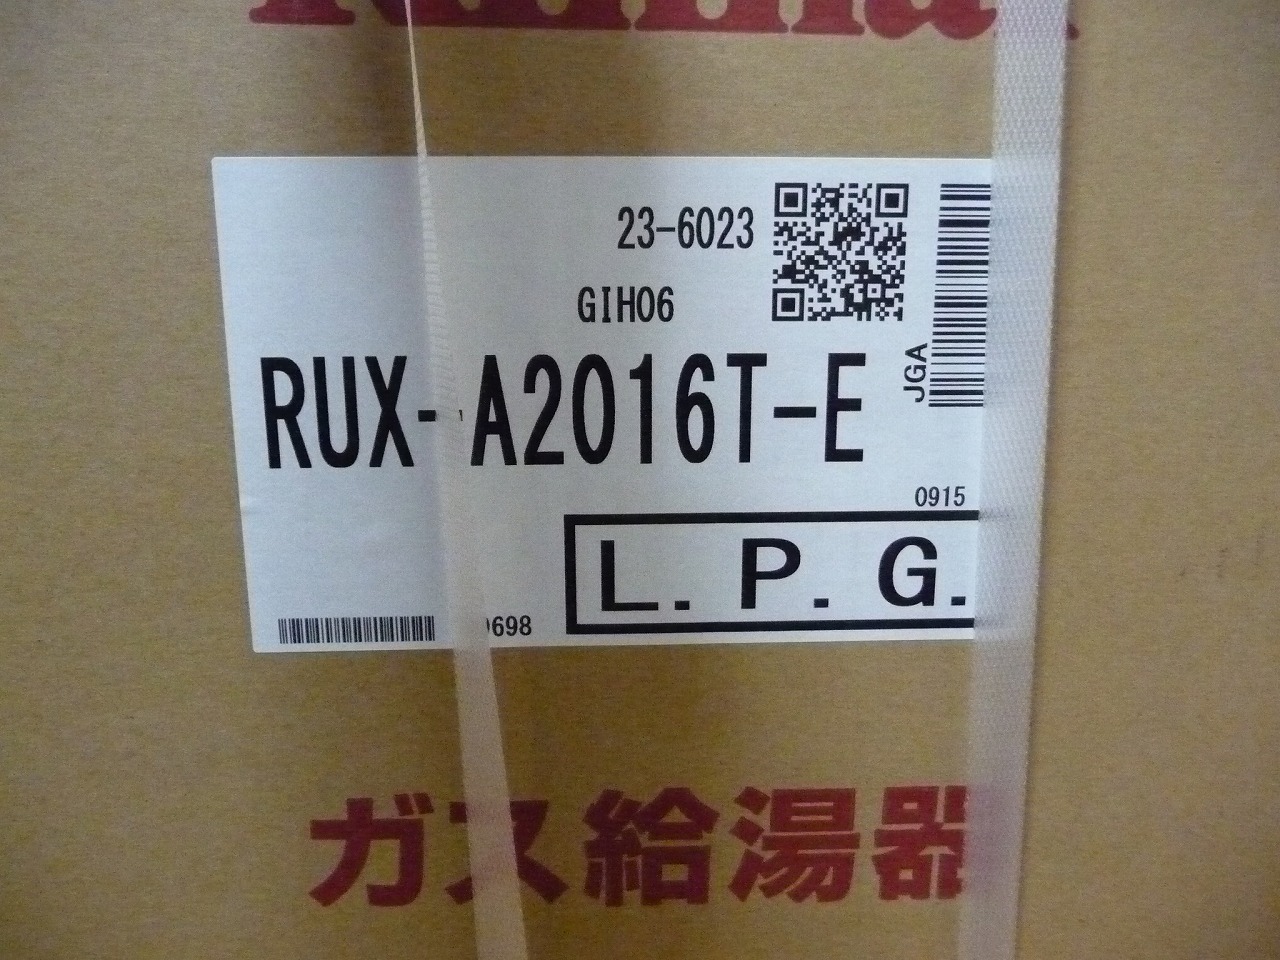 RUX-A2016T-E